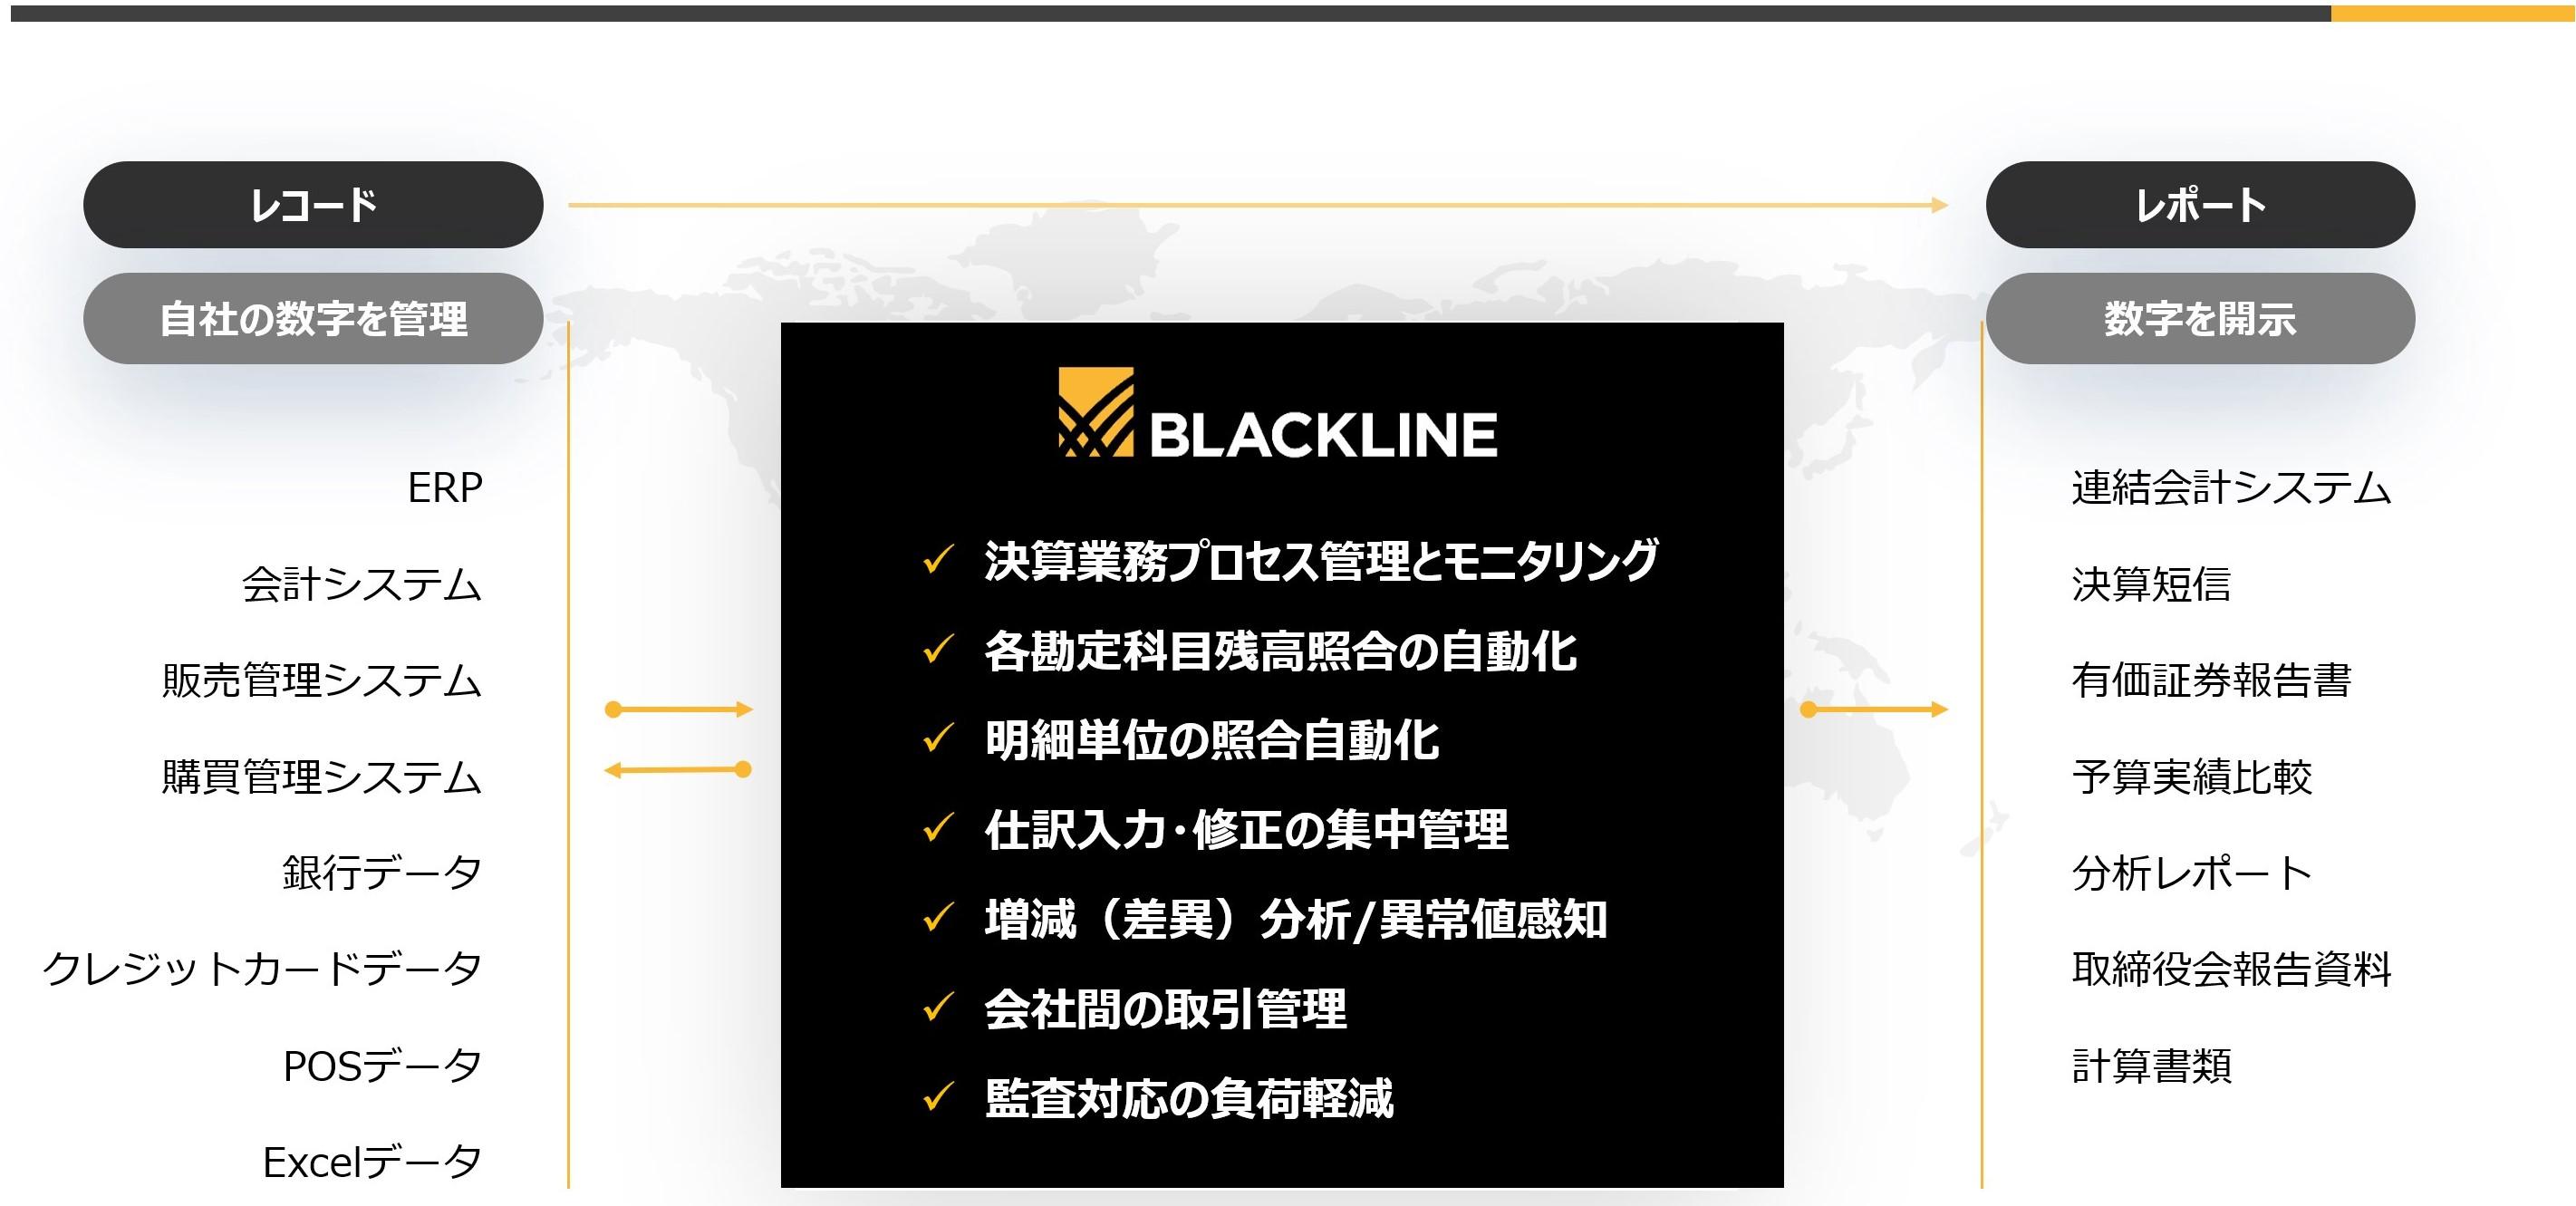 BlackLine overview.jpg